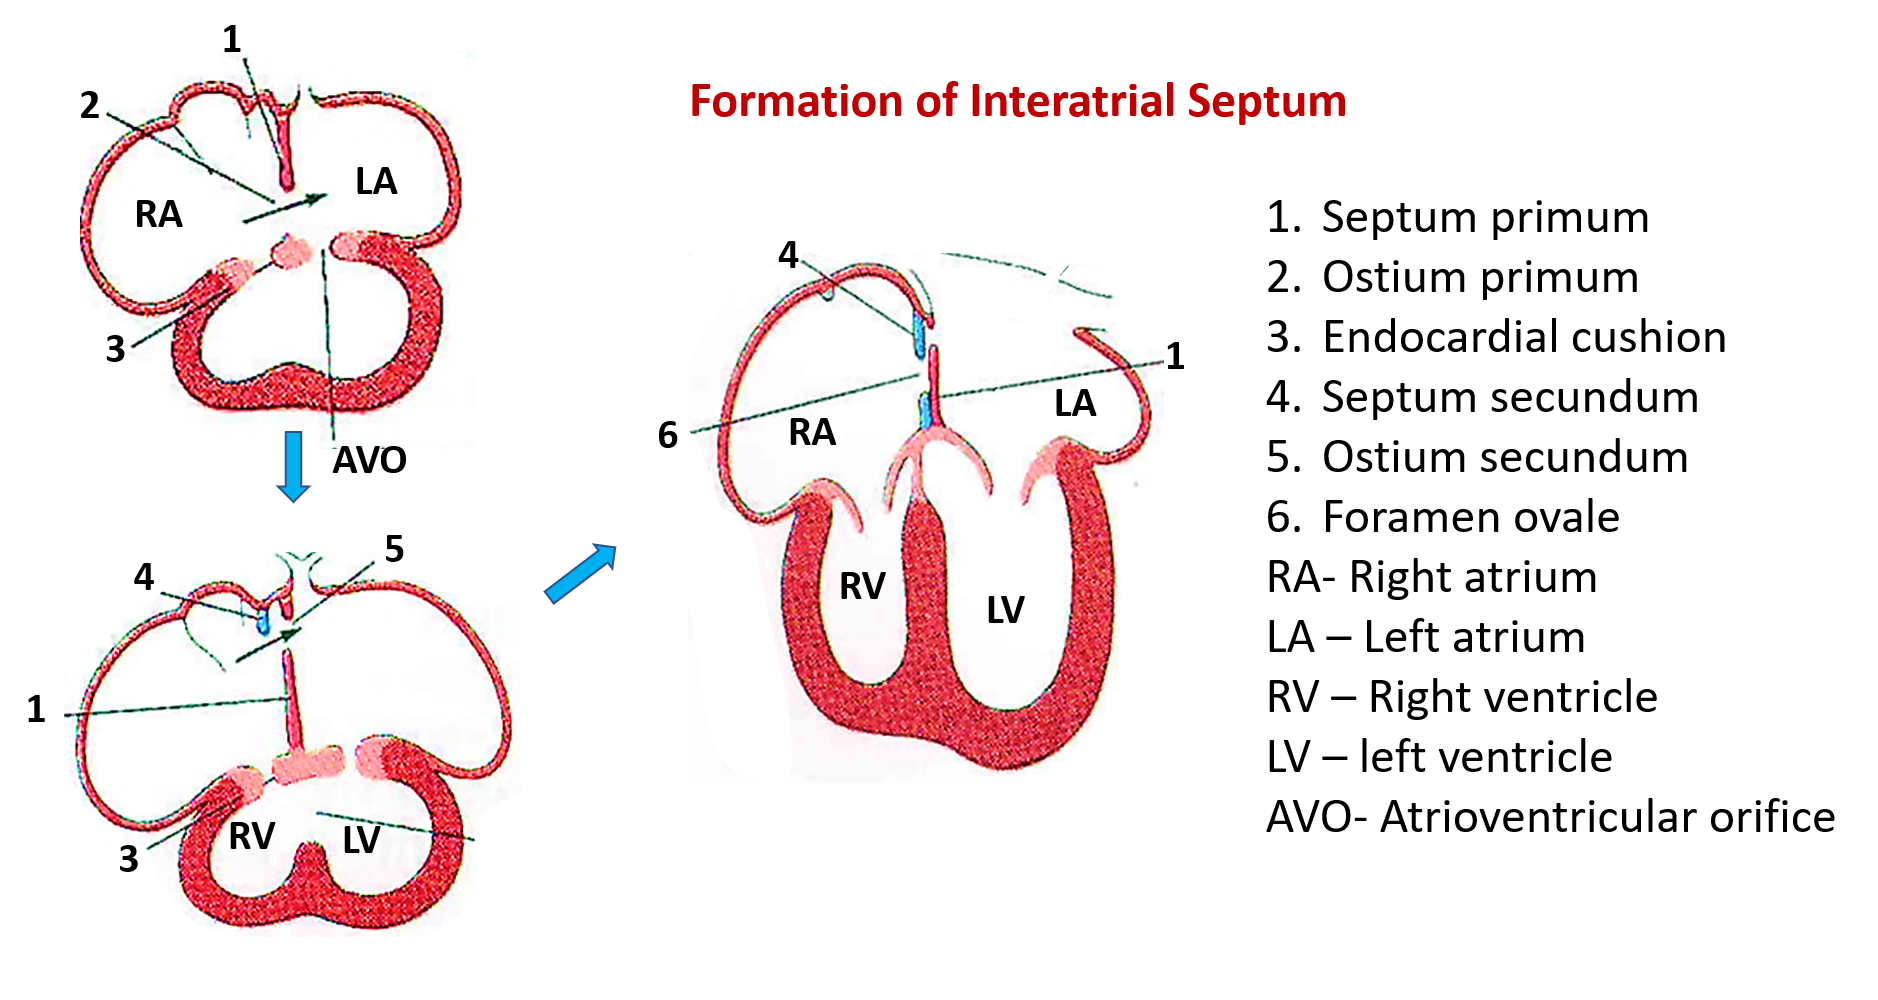 Formation of interatrial septum